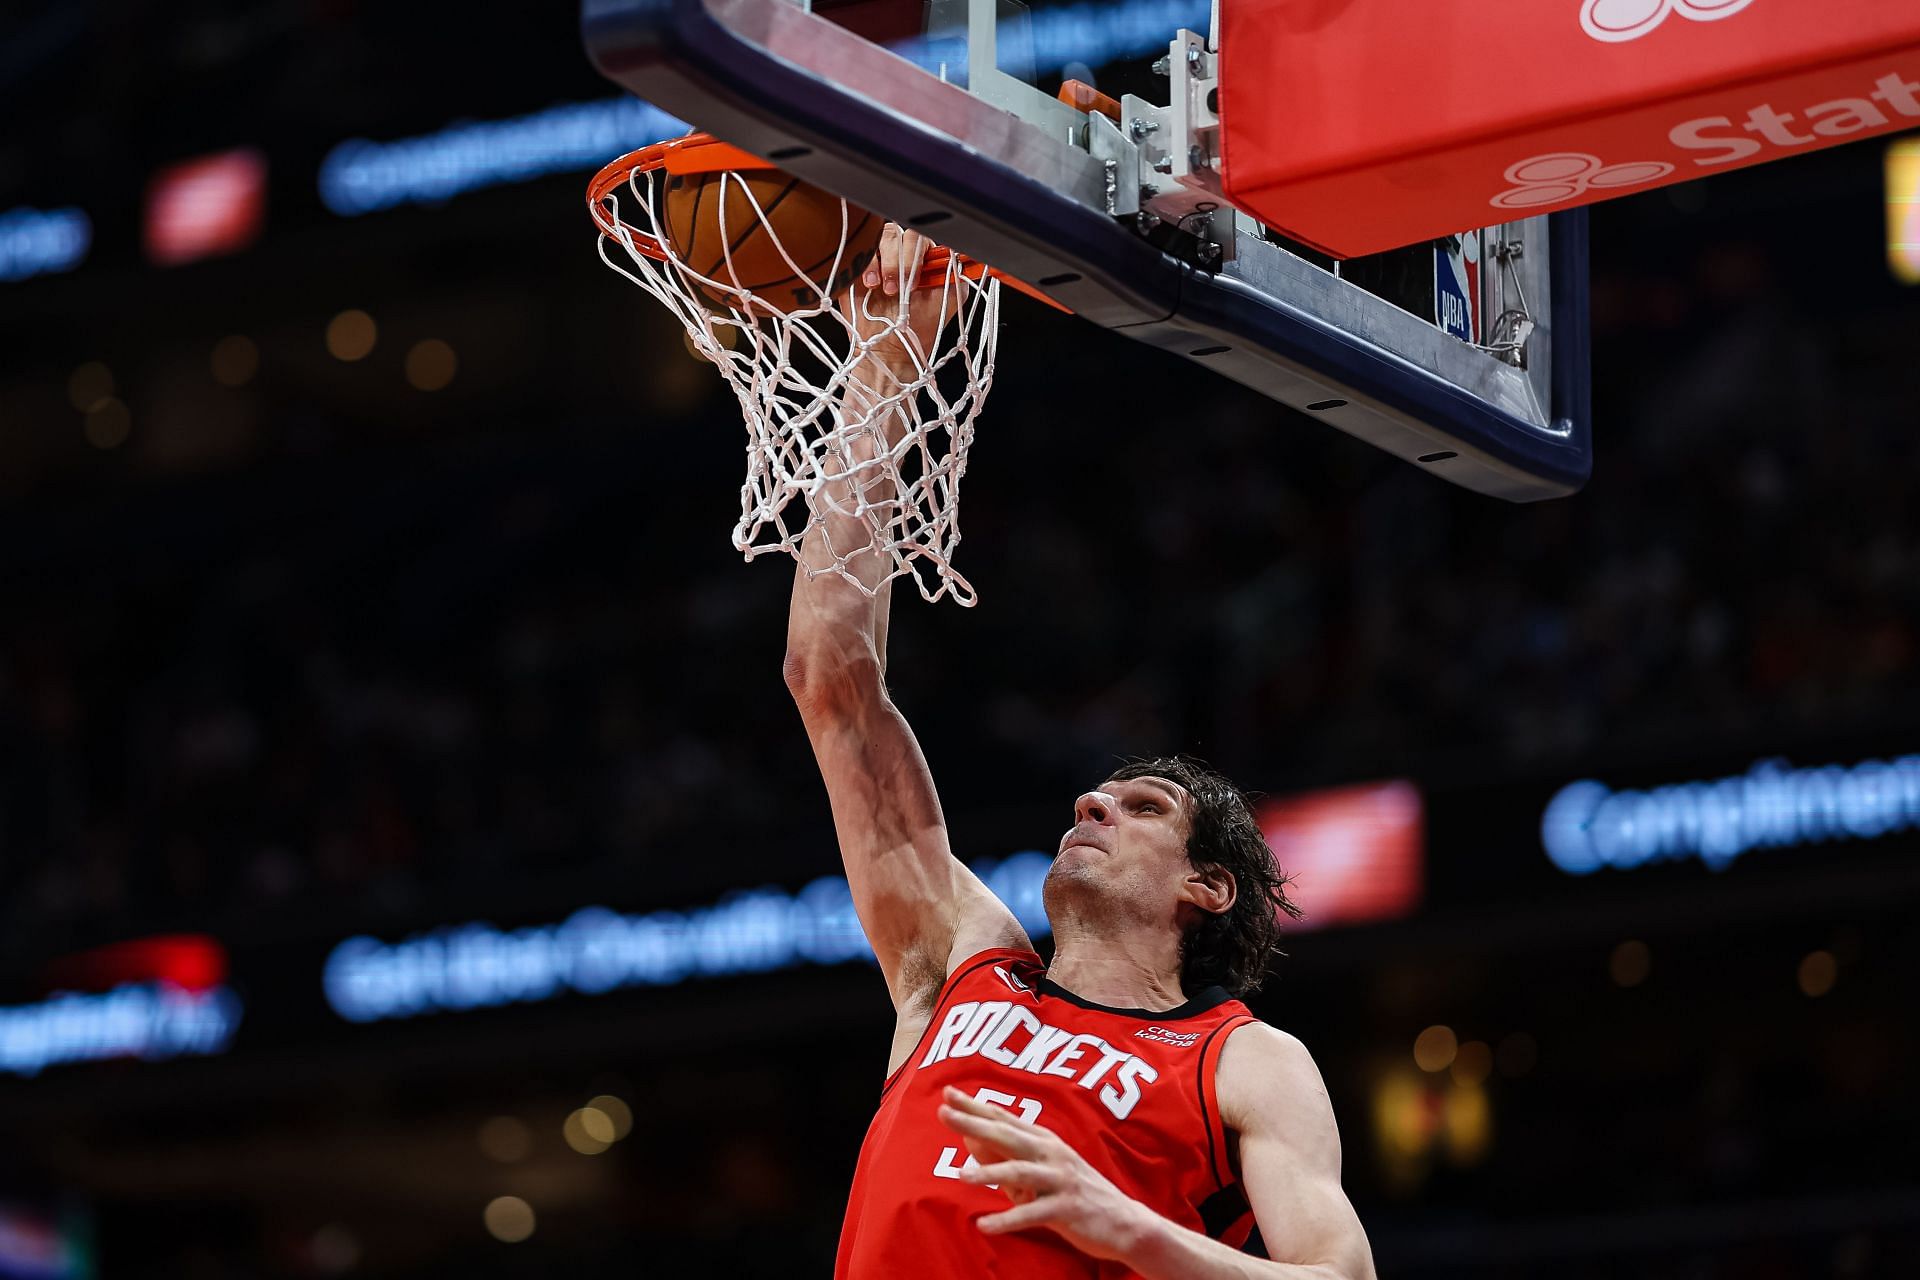 NBA star Boban Marjanovic's upload sends the internet into meltdown